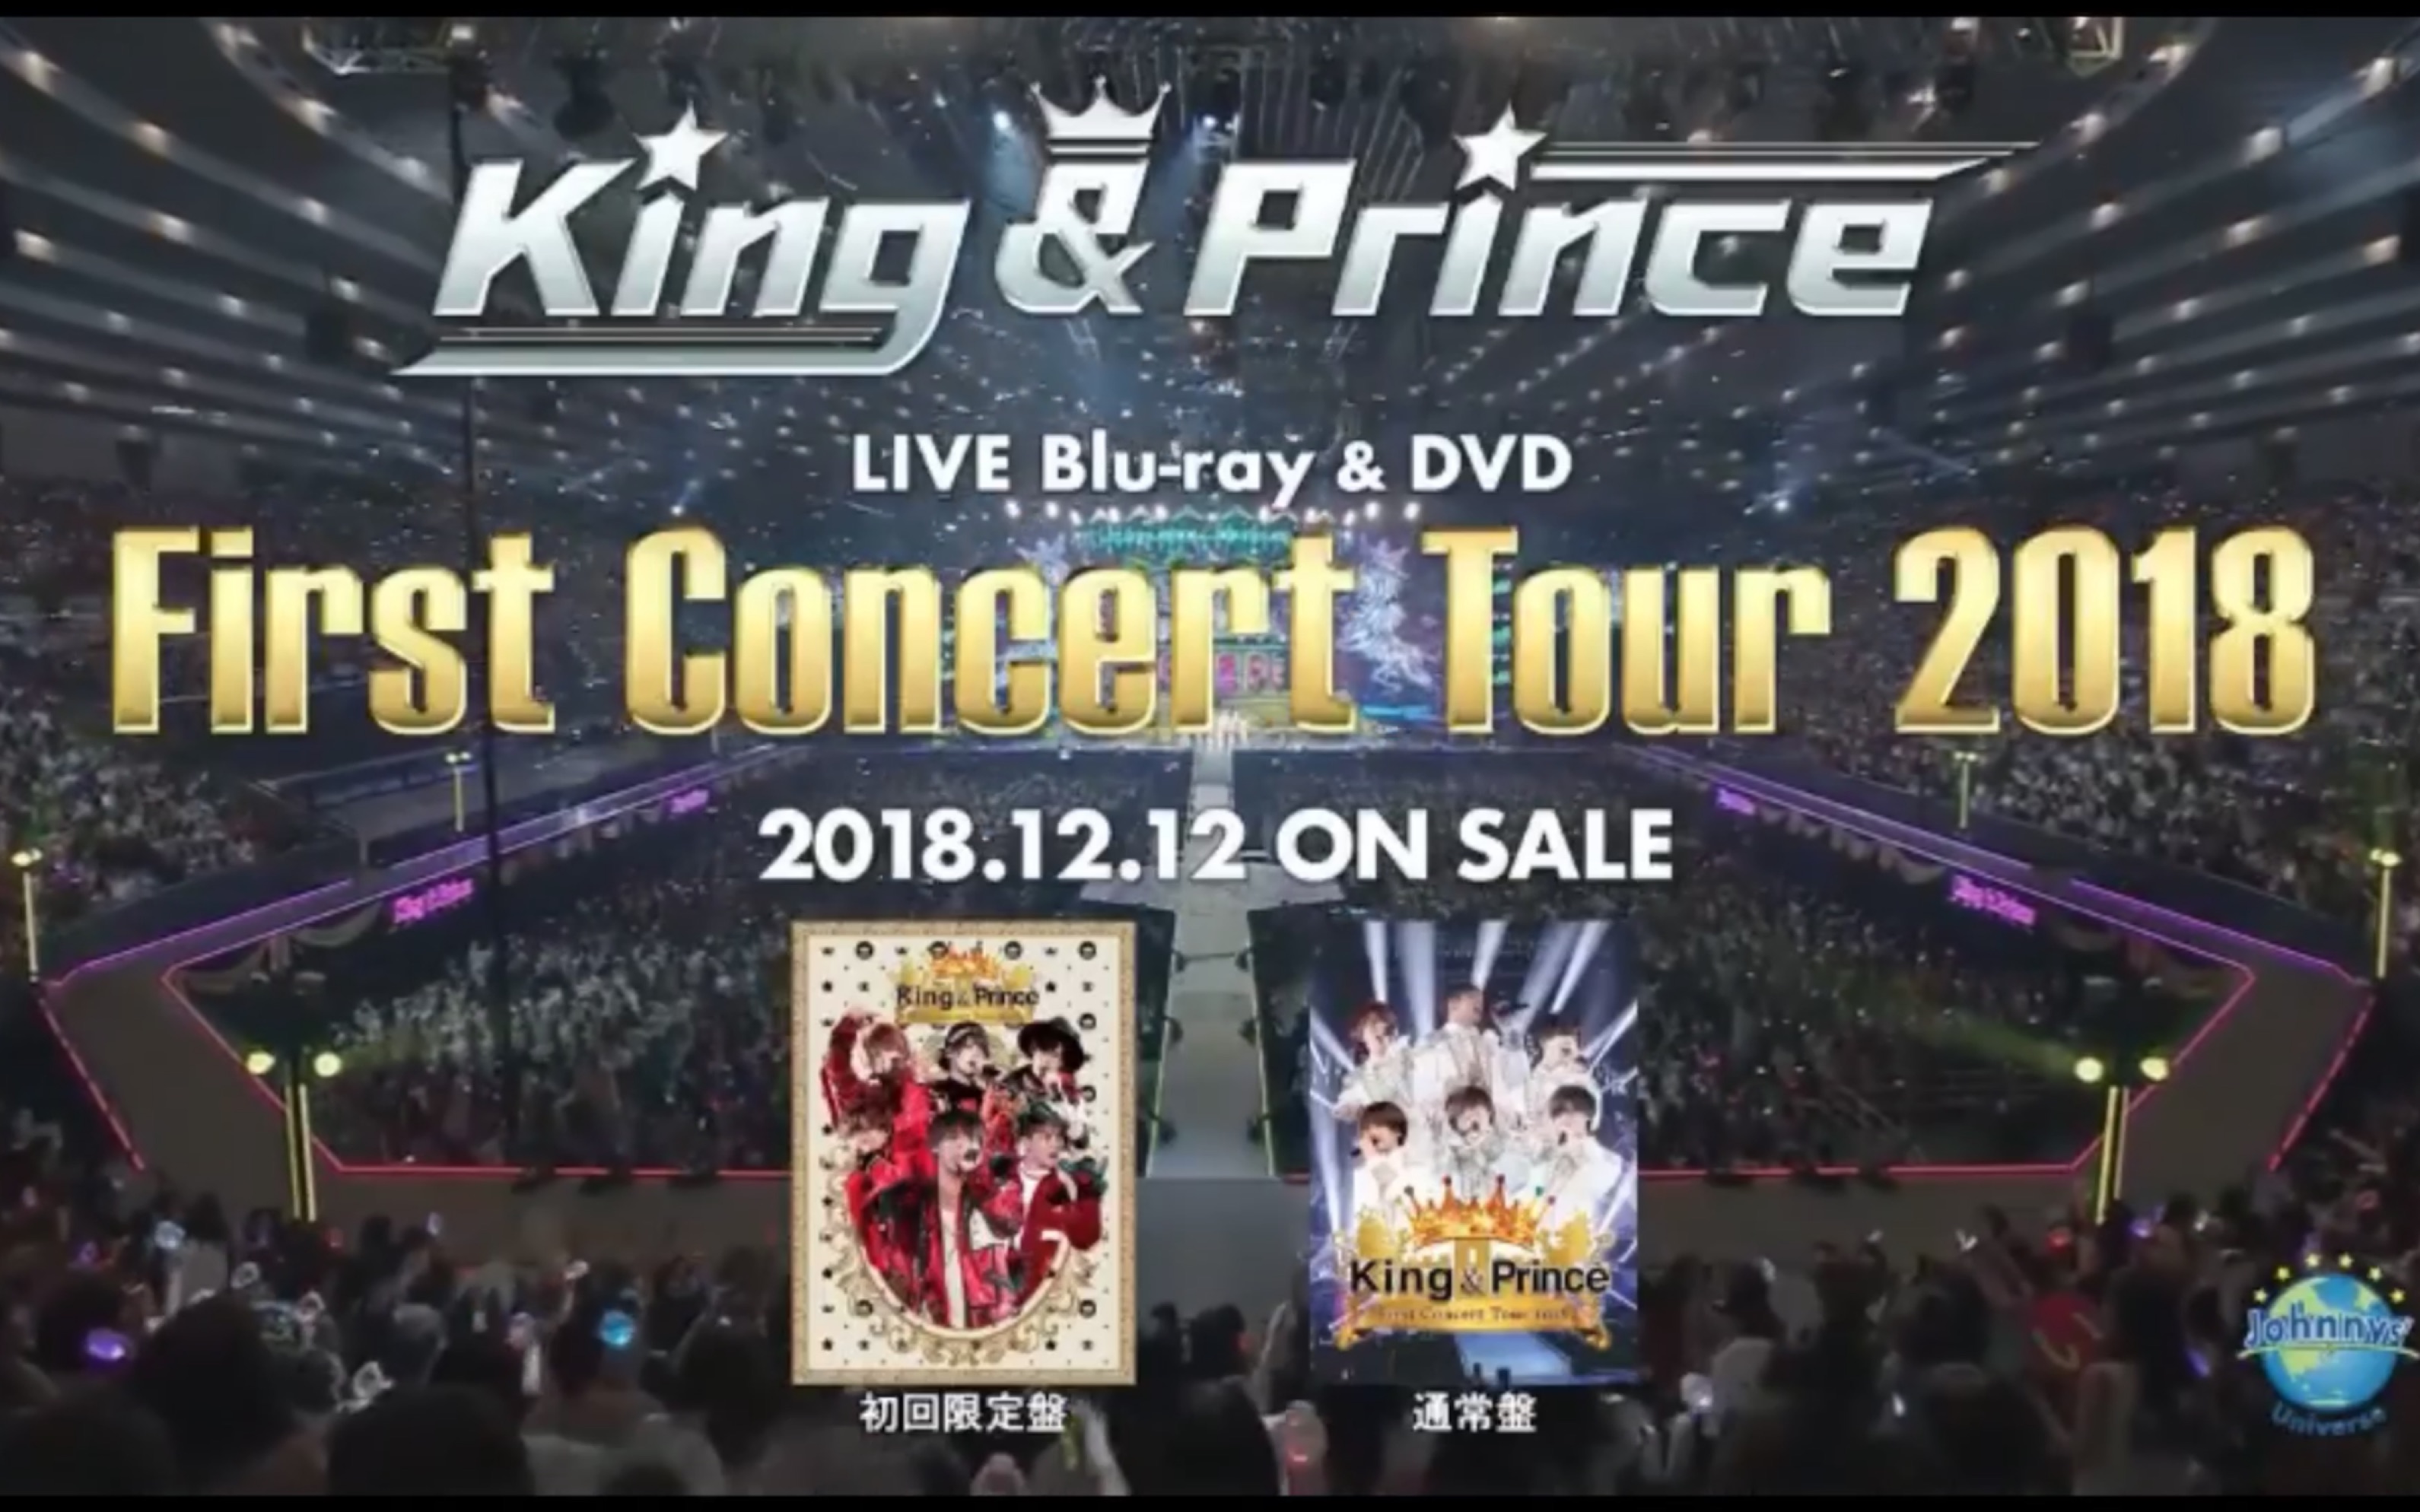 King & Prince] First Concert Tour 2018 映象預覽低清錄影-哔哩哔哩